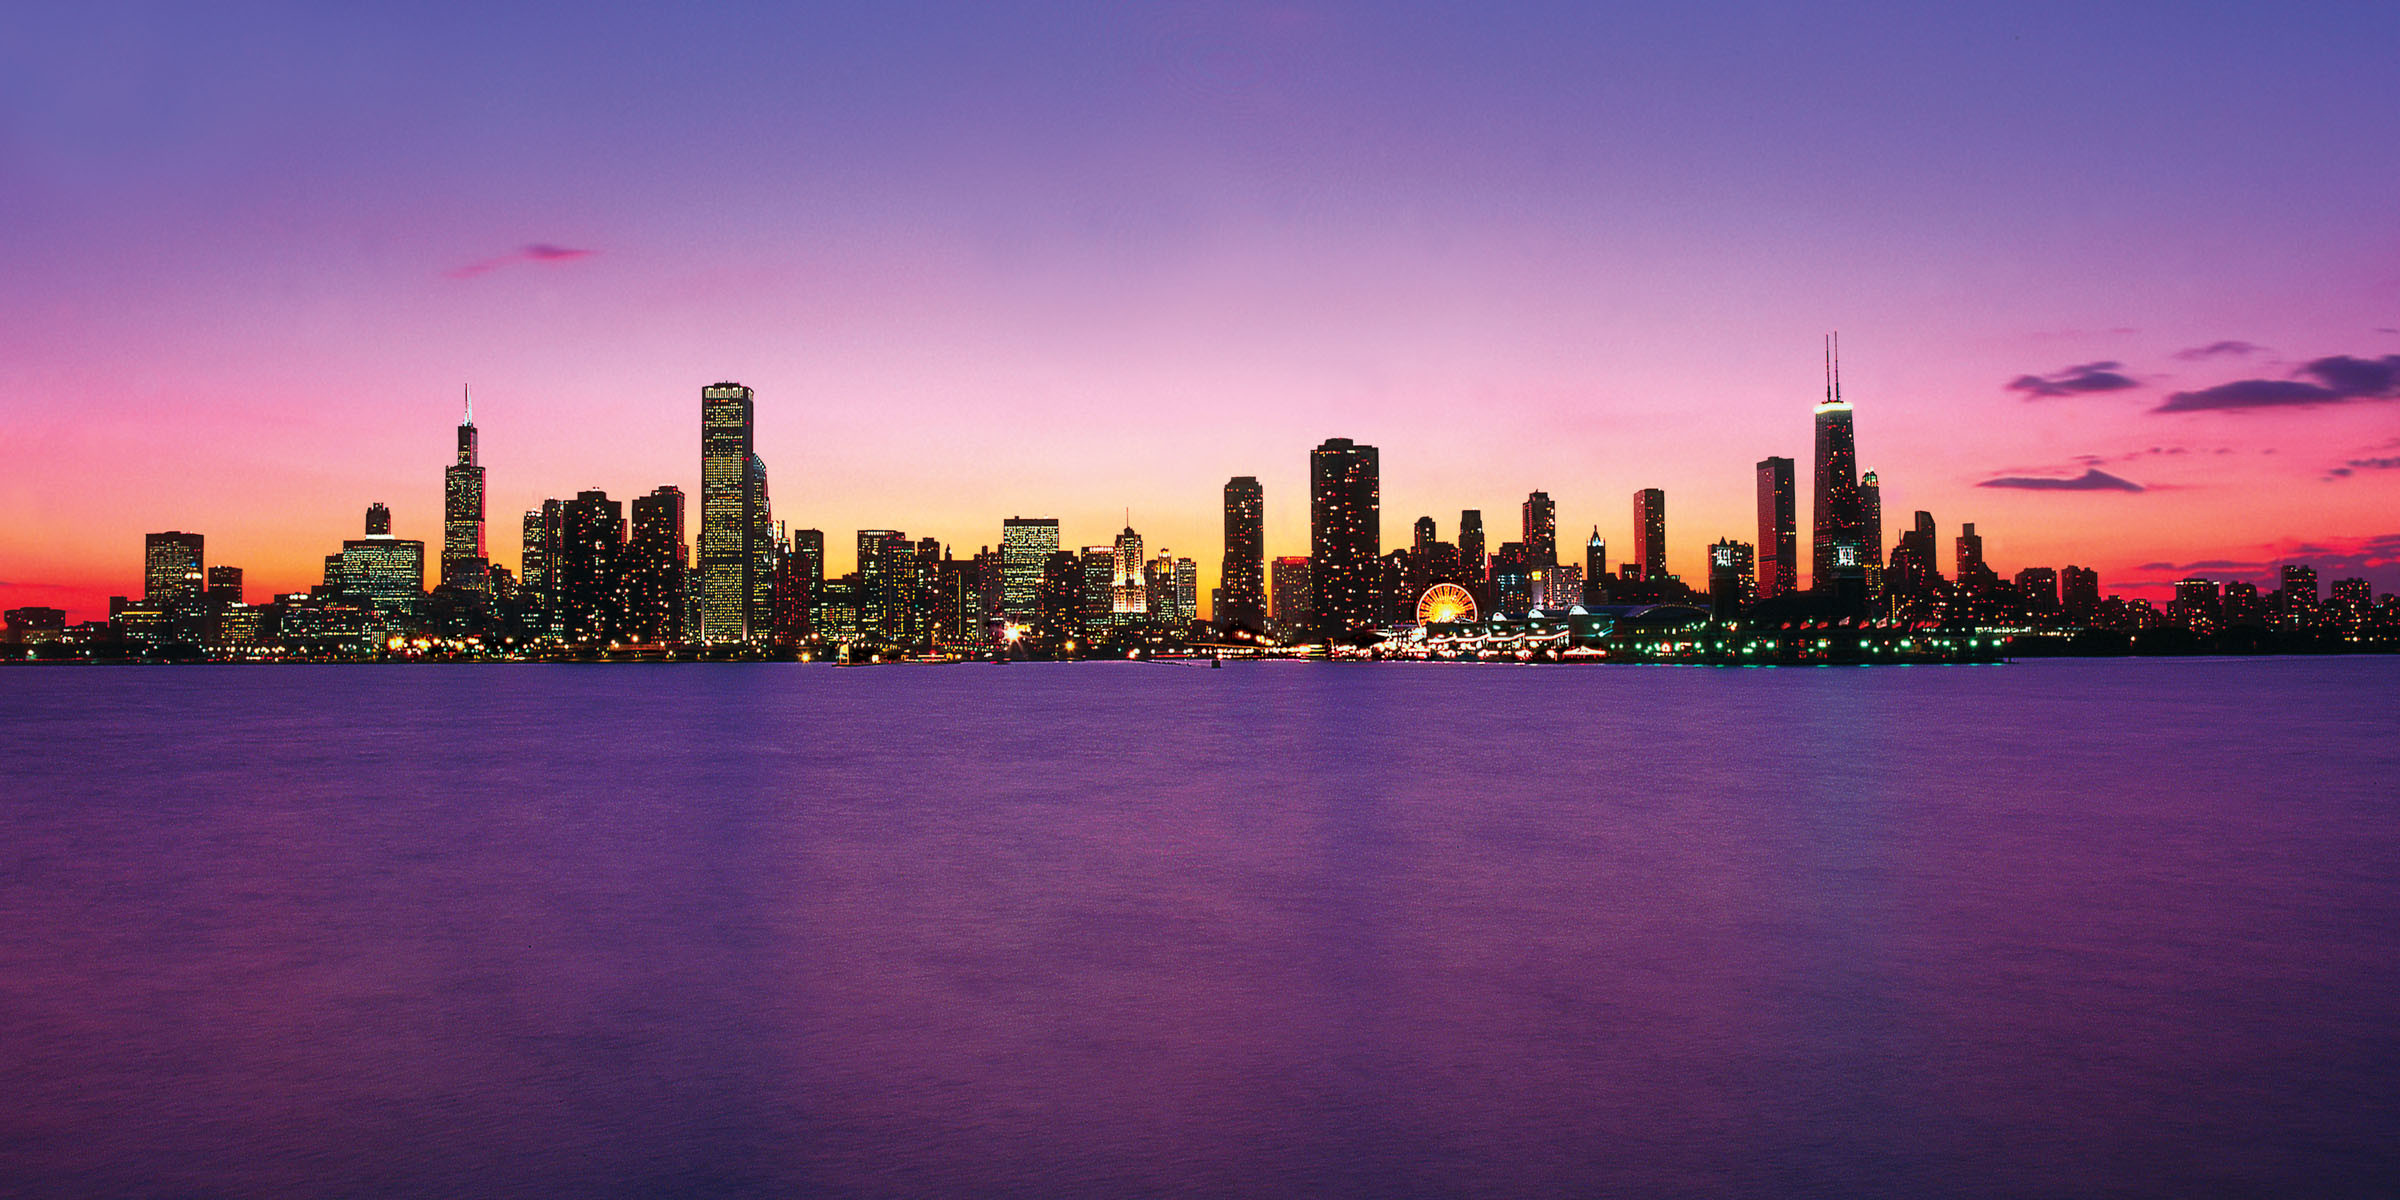 2400x1200 Chicago Skyline Wallpaper | Chicago Skyline Purple photos, wallpapers